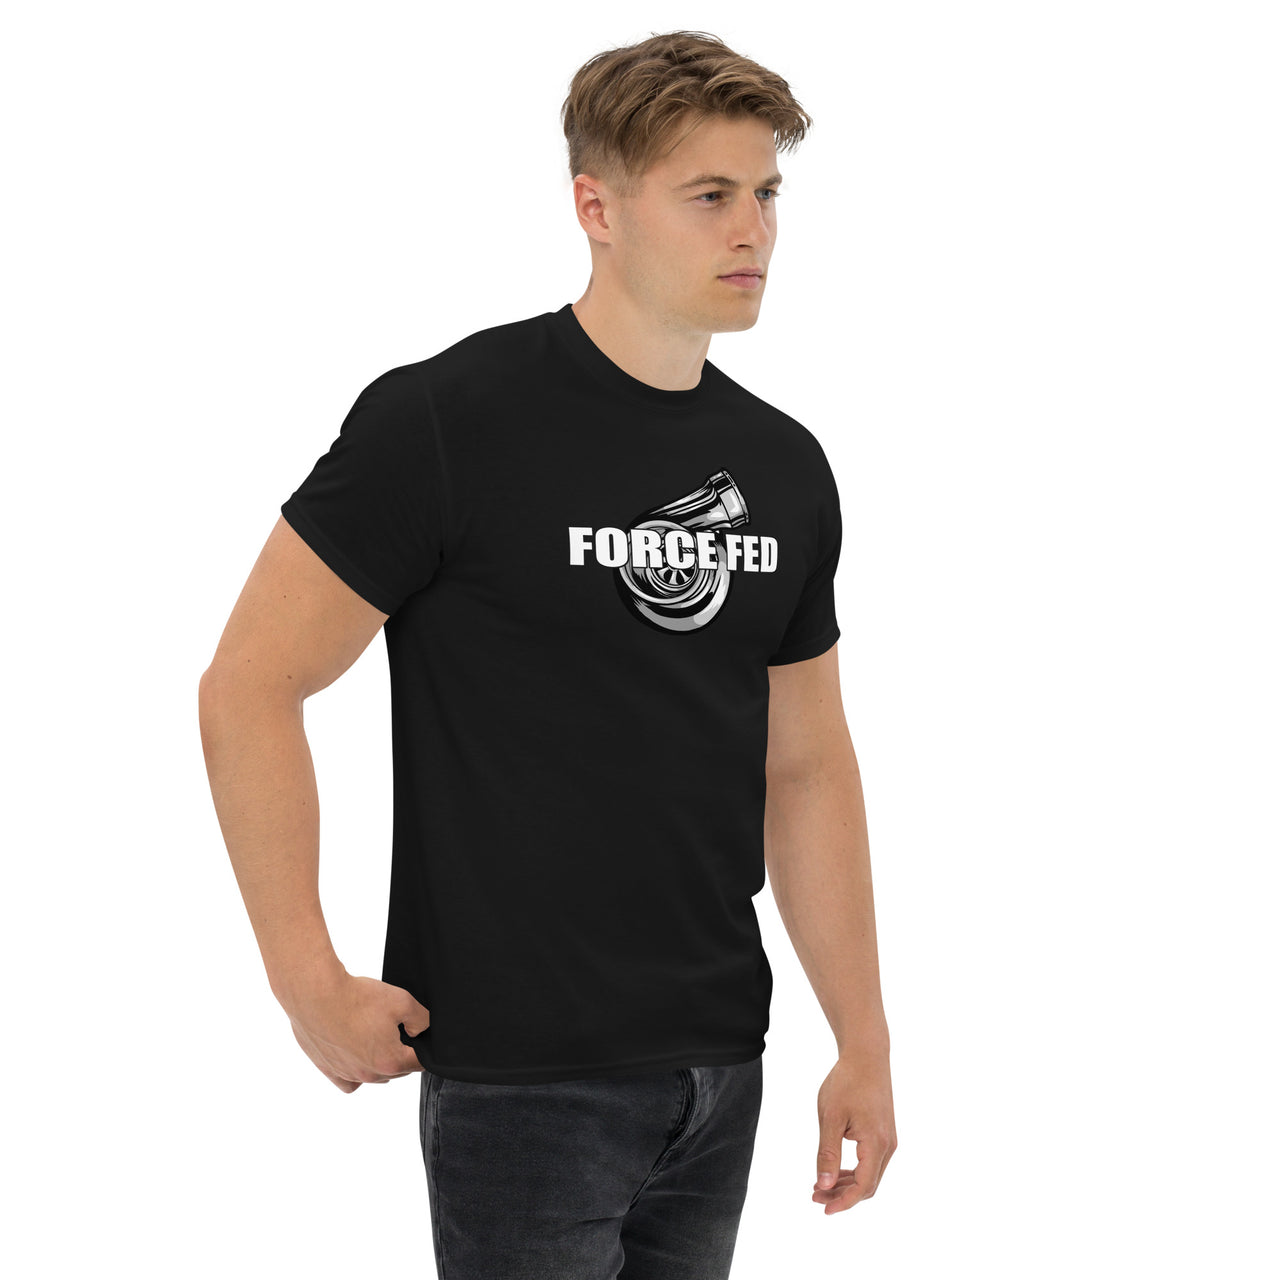 Force Fed T-Shirt - Car Guy Turbo Shirt in black